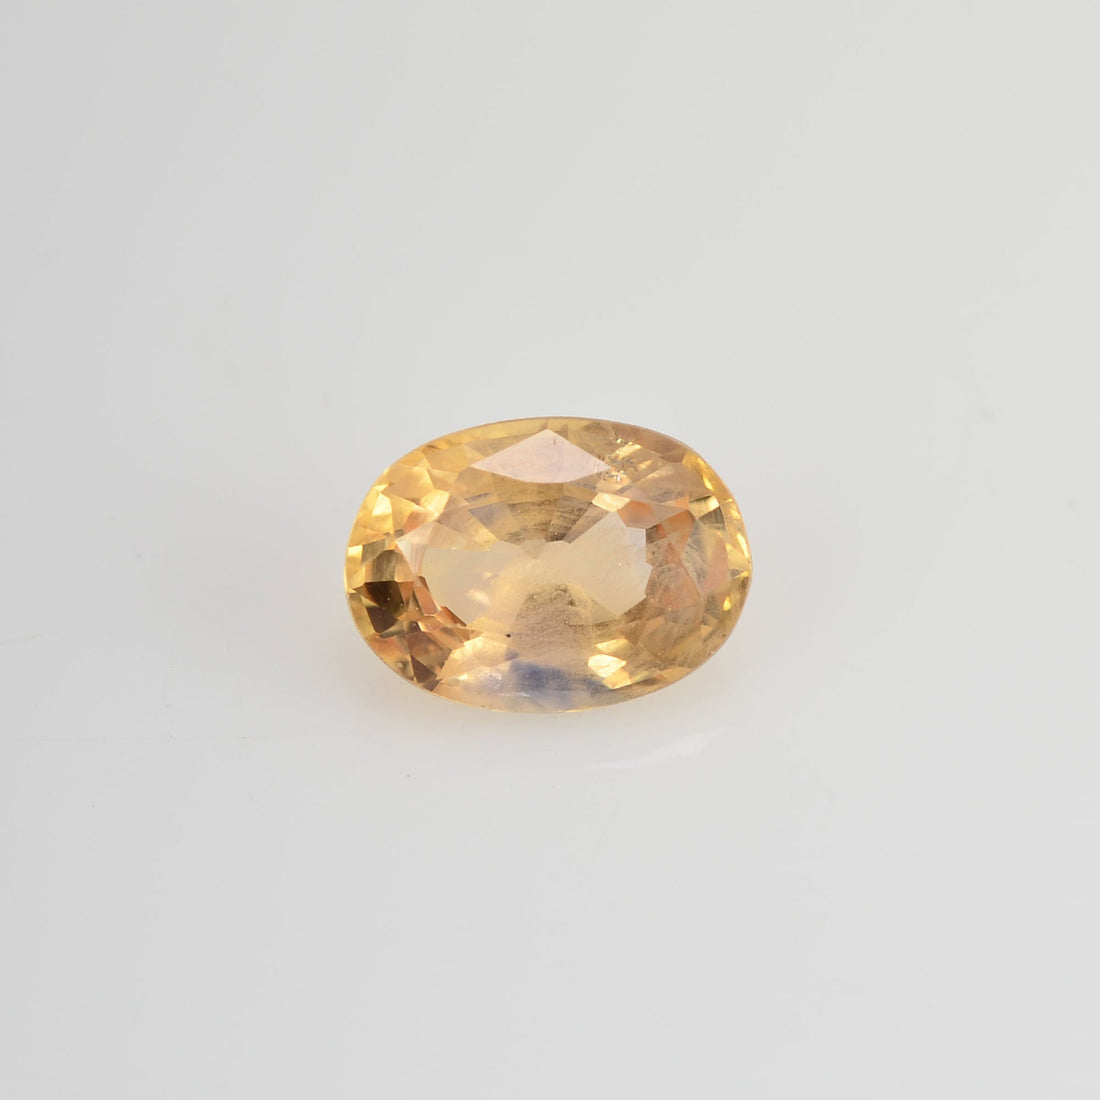 0.94 cts Natural Yellow Sapphire Loose Gemstone Oval Cut - Thai Gems Export Ltd.